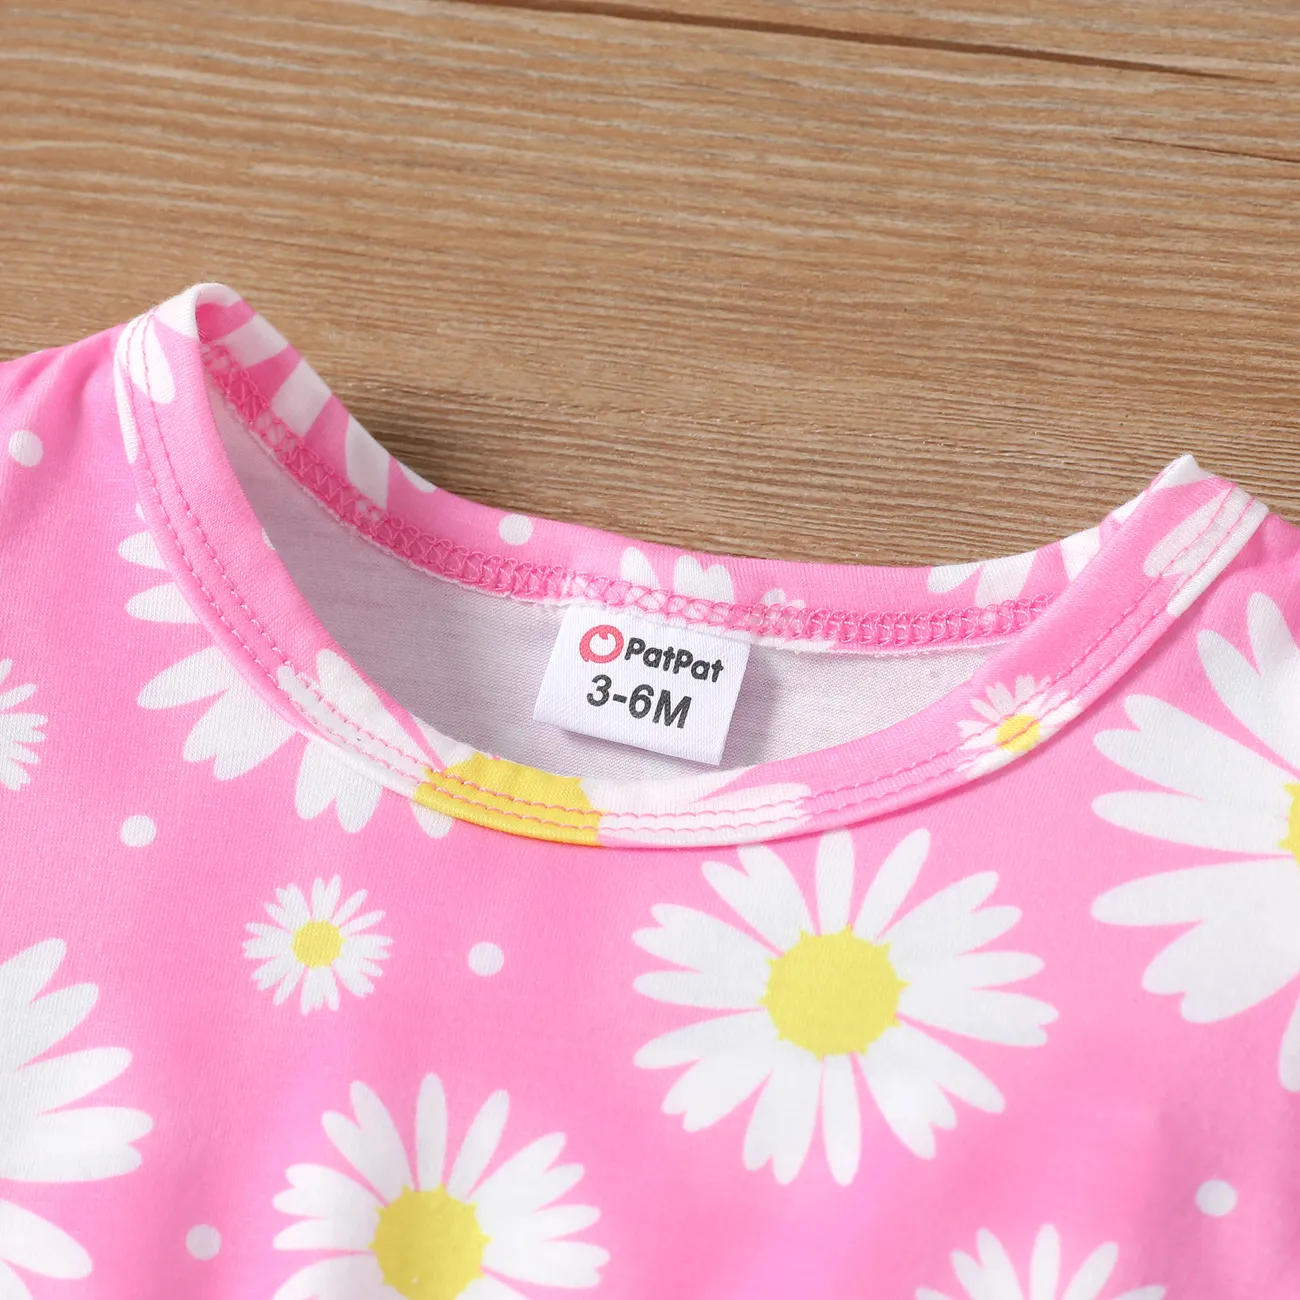 Baby/Toddler Girl 2pcs Puff-sleeve Floral Print Top and Polka Dots Print Leggings Set Pink big image 1